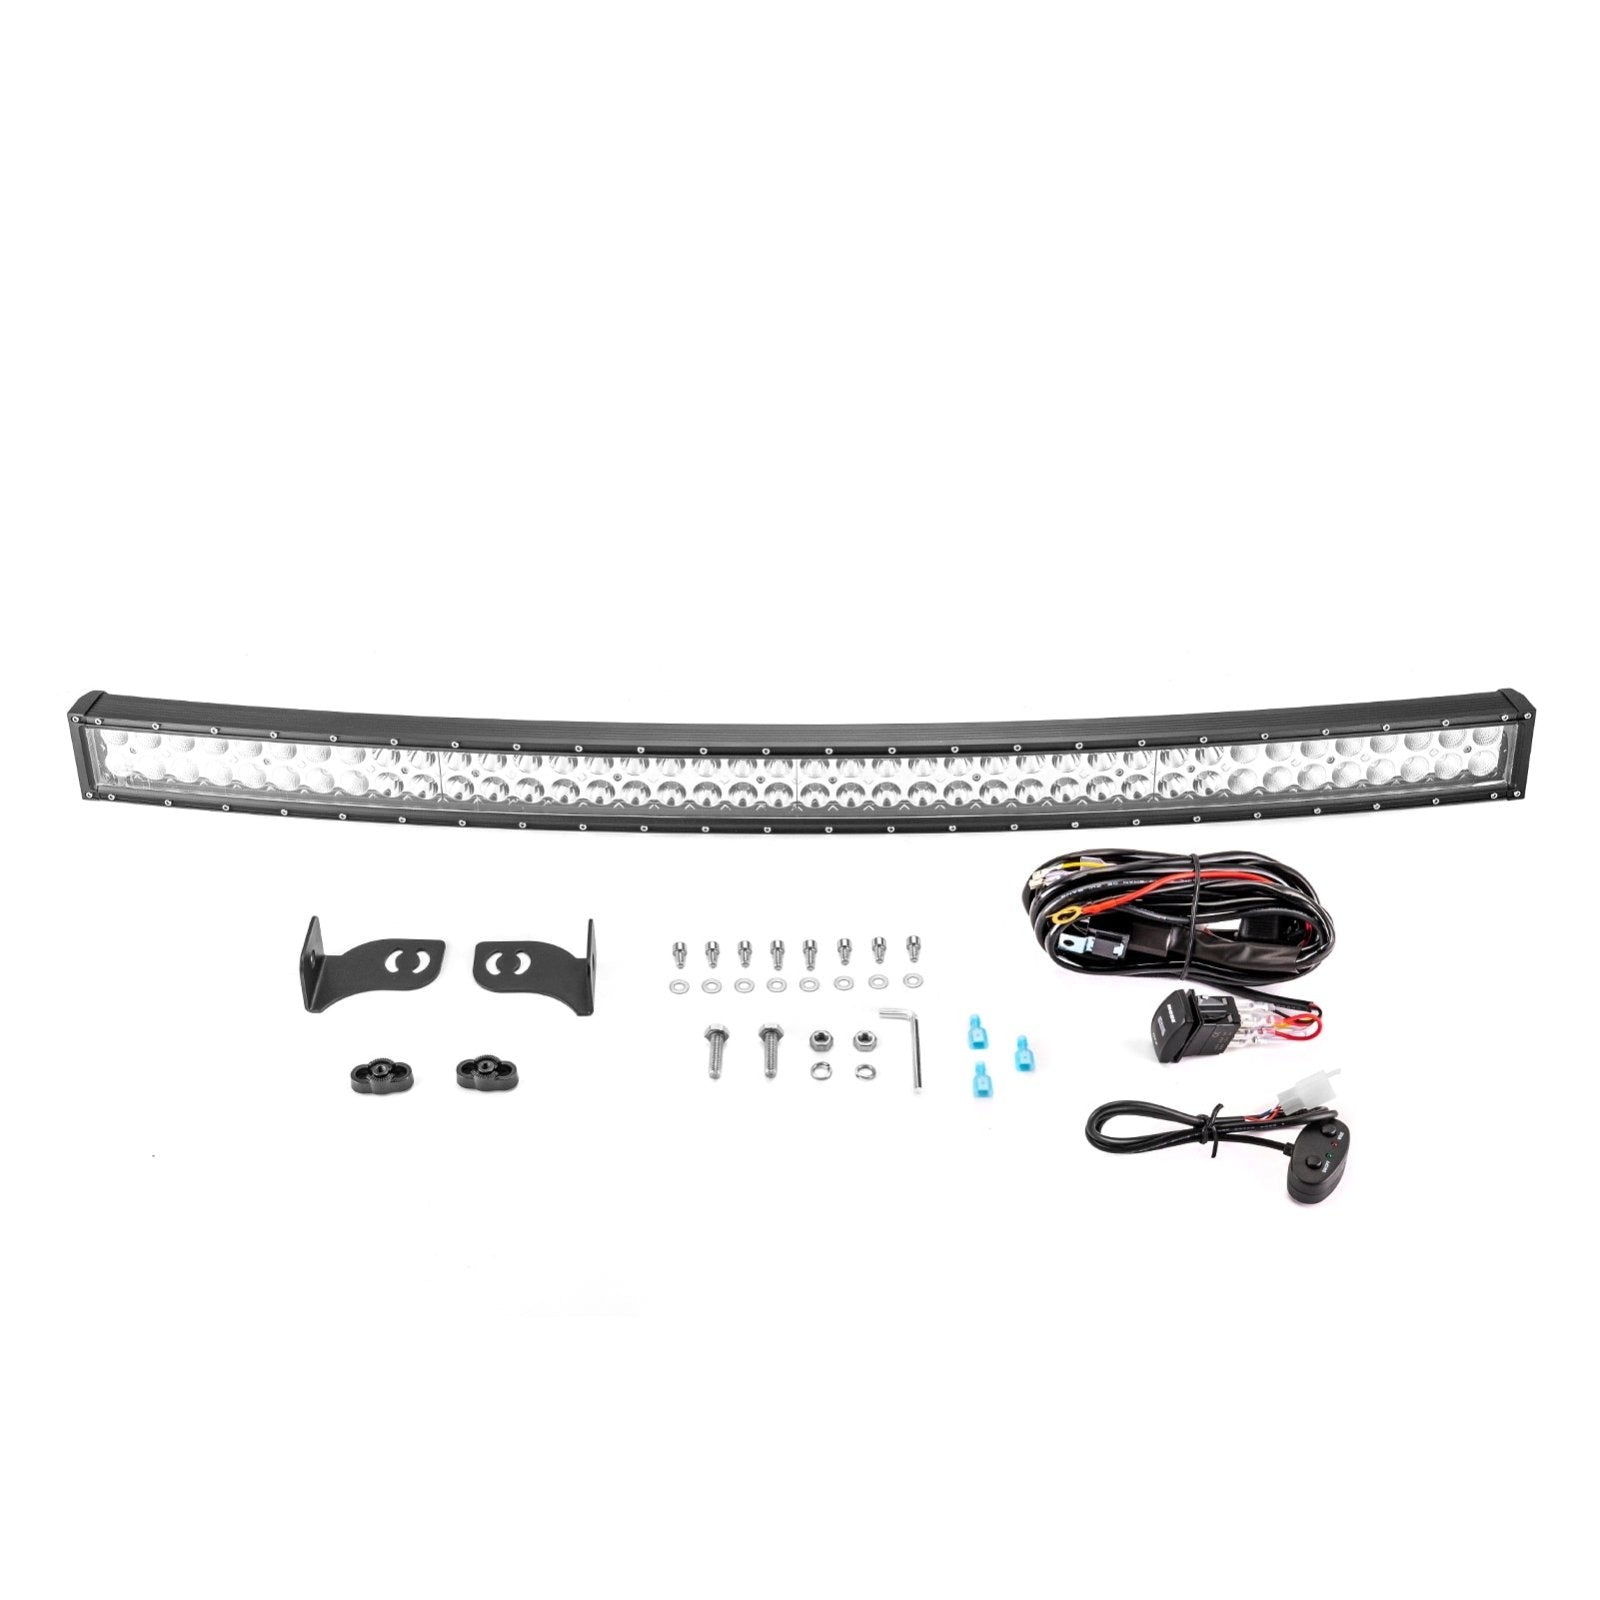 Jeep Ford Toyota UTV ATV 42" Dual Rows Curved LED Light Bar W/ Wiring Harness Kit | Amber White & Strobe Modes - Weisen